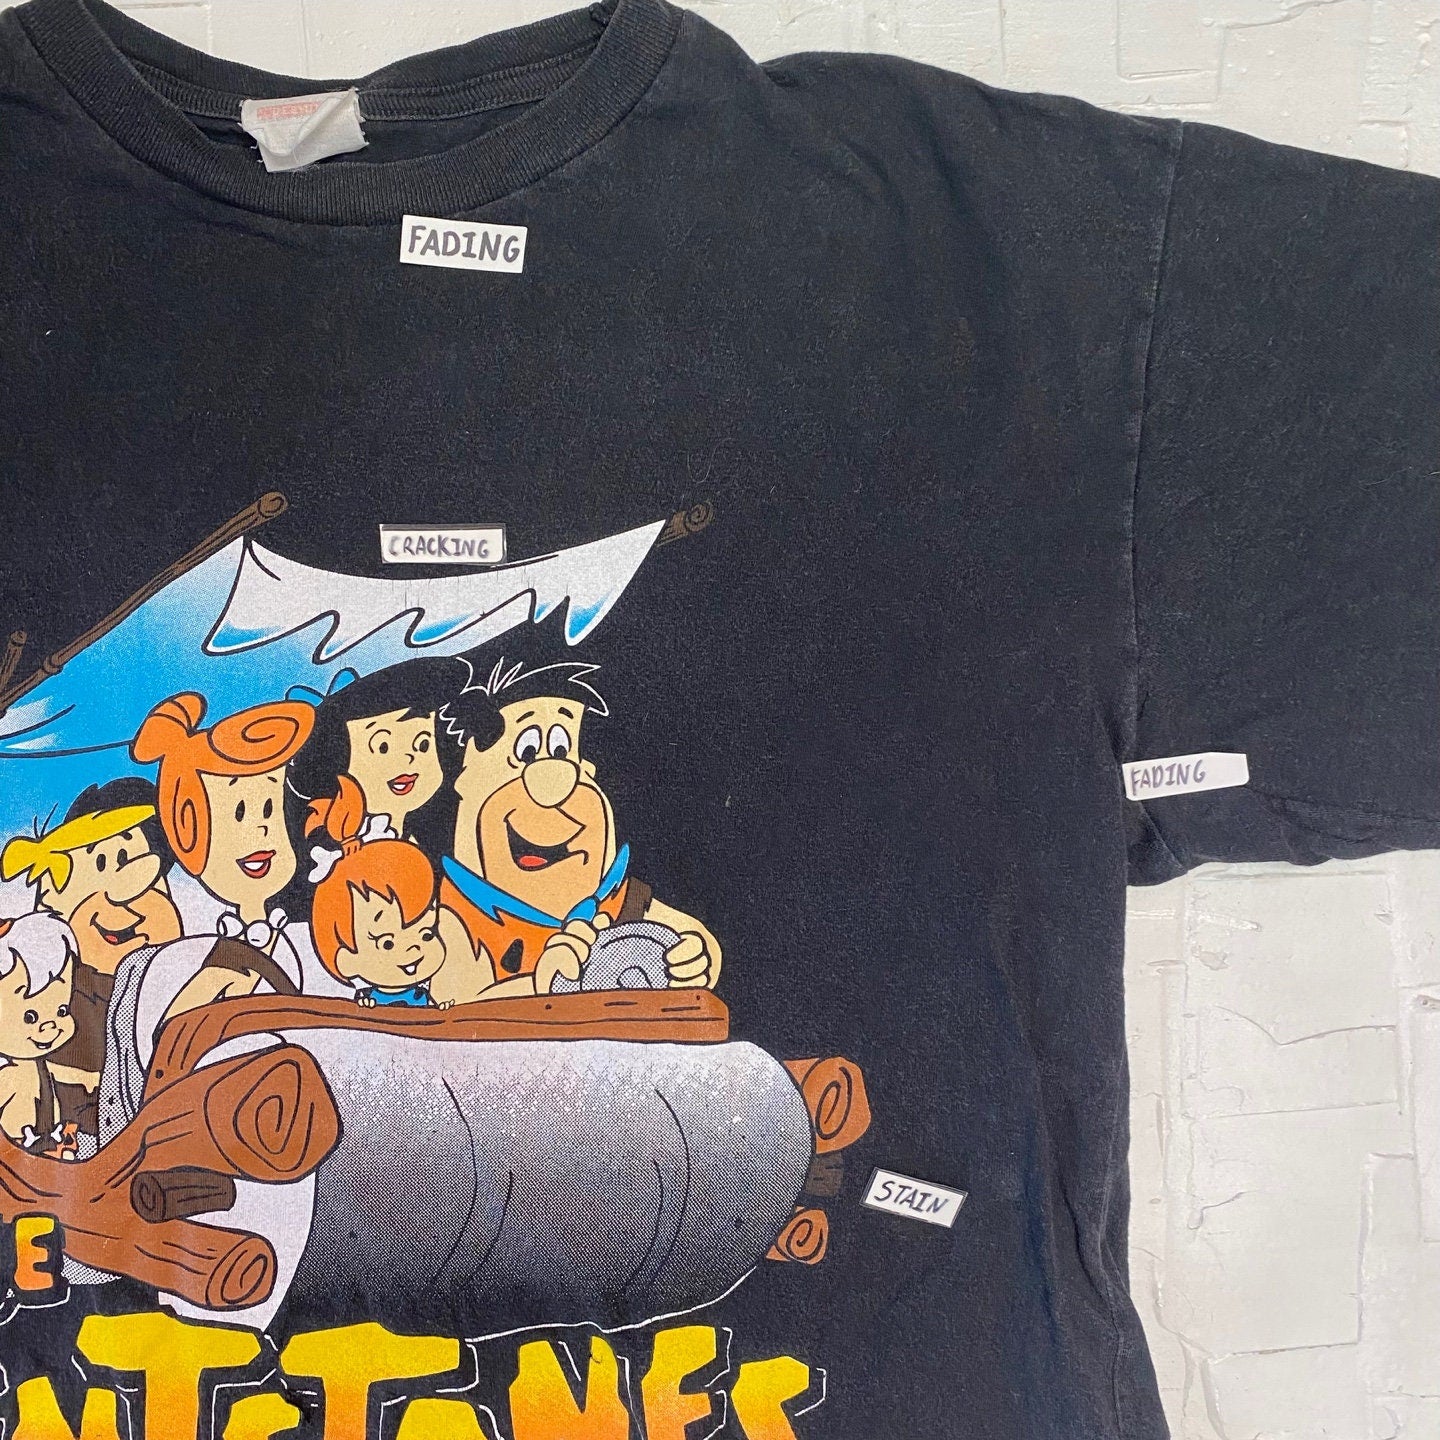 1994 Vintage "The Flintstones" Colourful Graphic Character Design T-Shirt | Vintage T-Shirt | The Flintstones Graphic | SKU M-1885 |